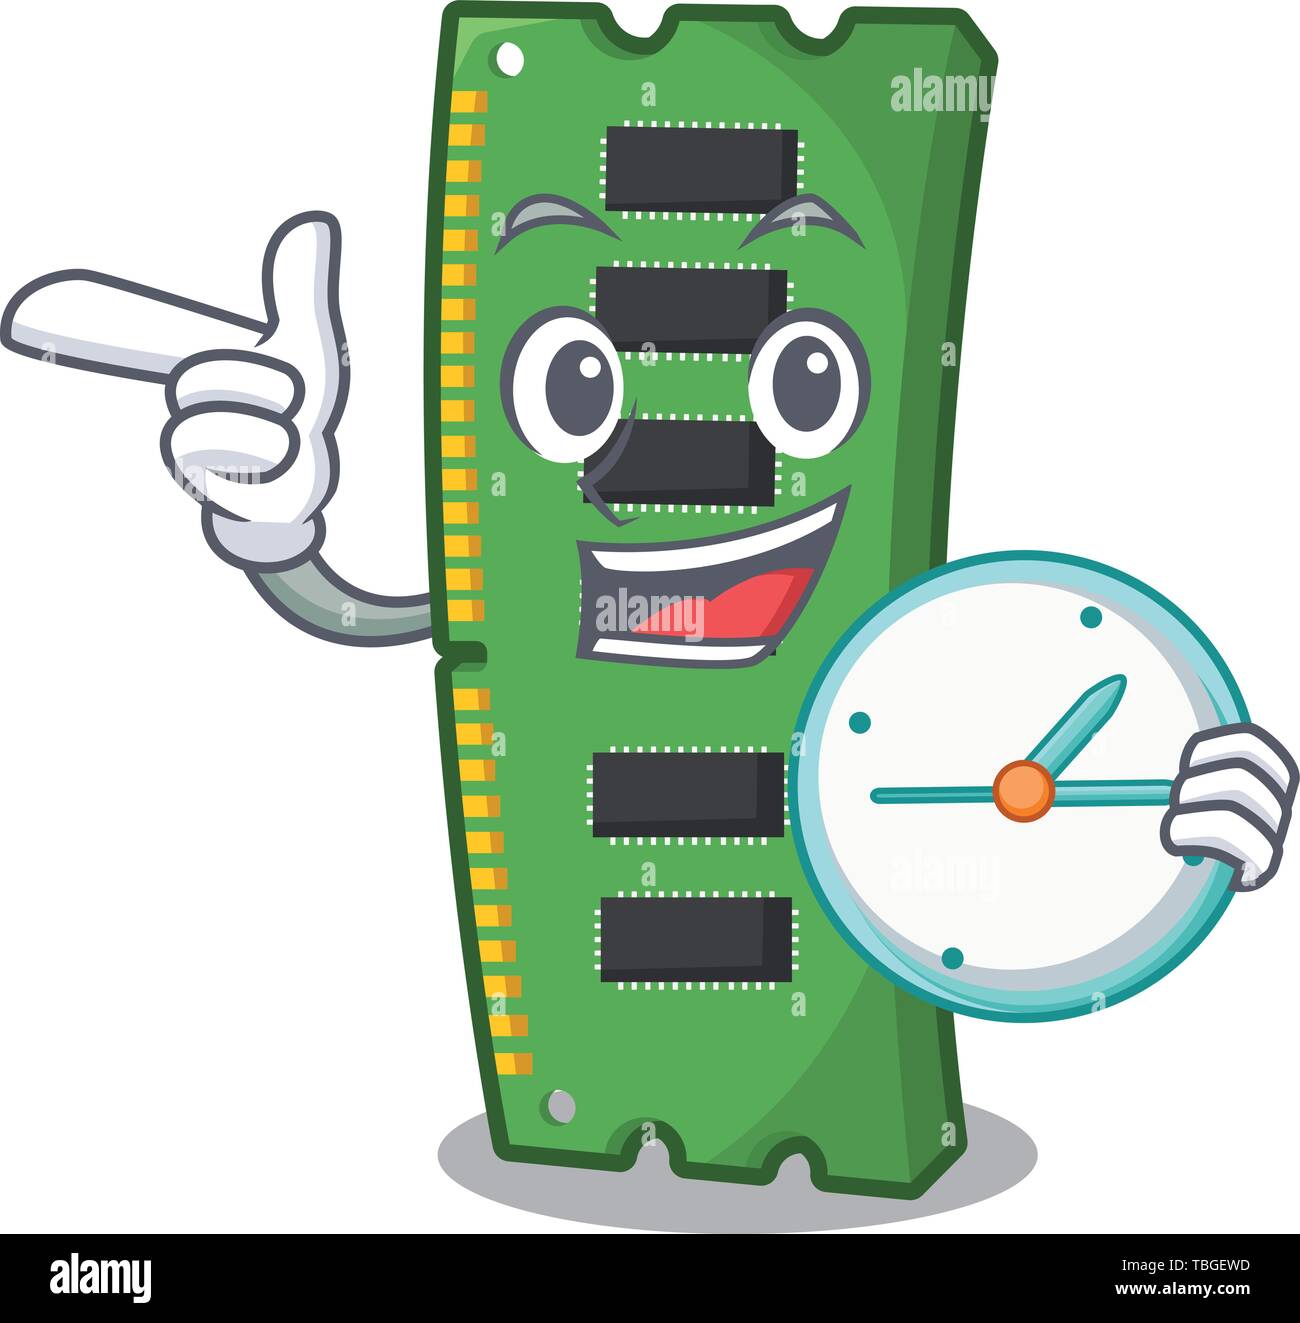 With clock RAM memory card the mascot shape Stock Vector